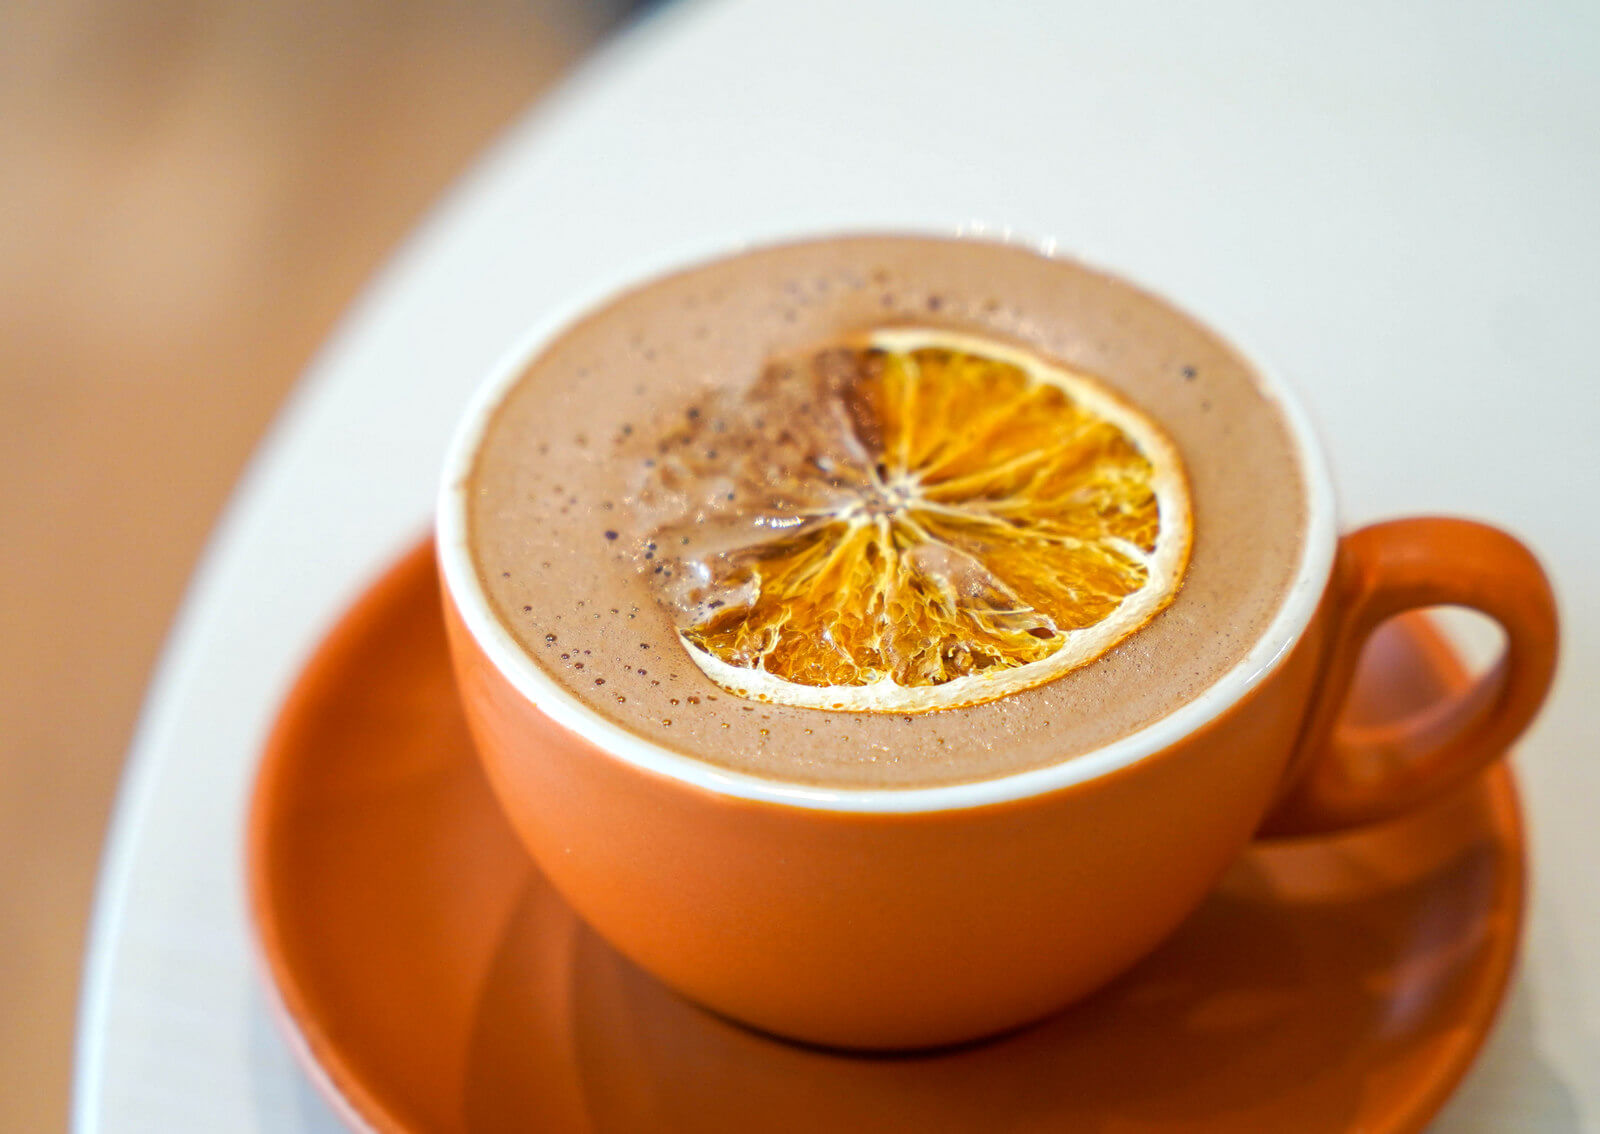 An orange mug of hot chocolate with a dried orange slice on top.